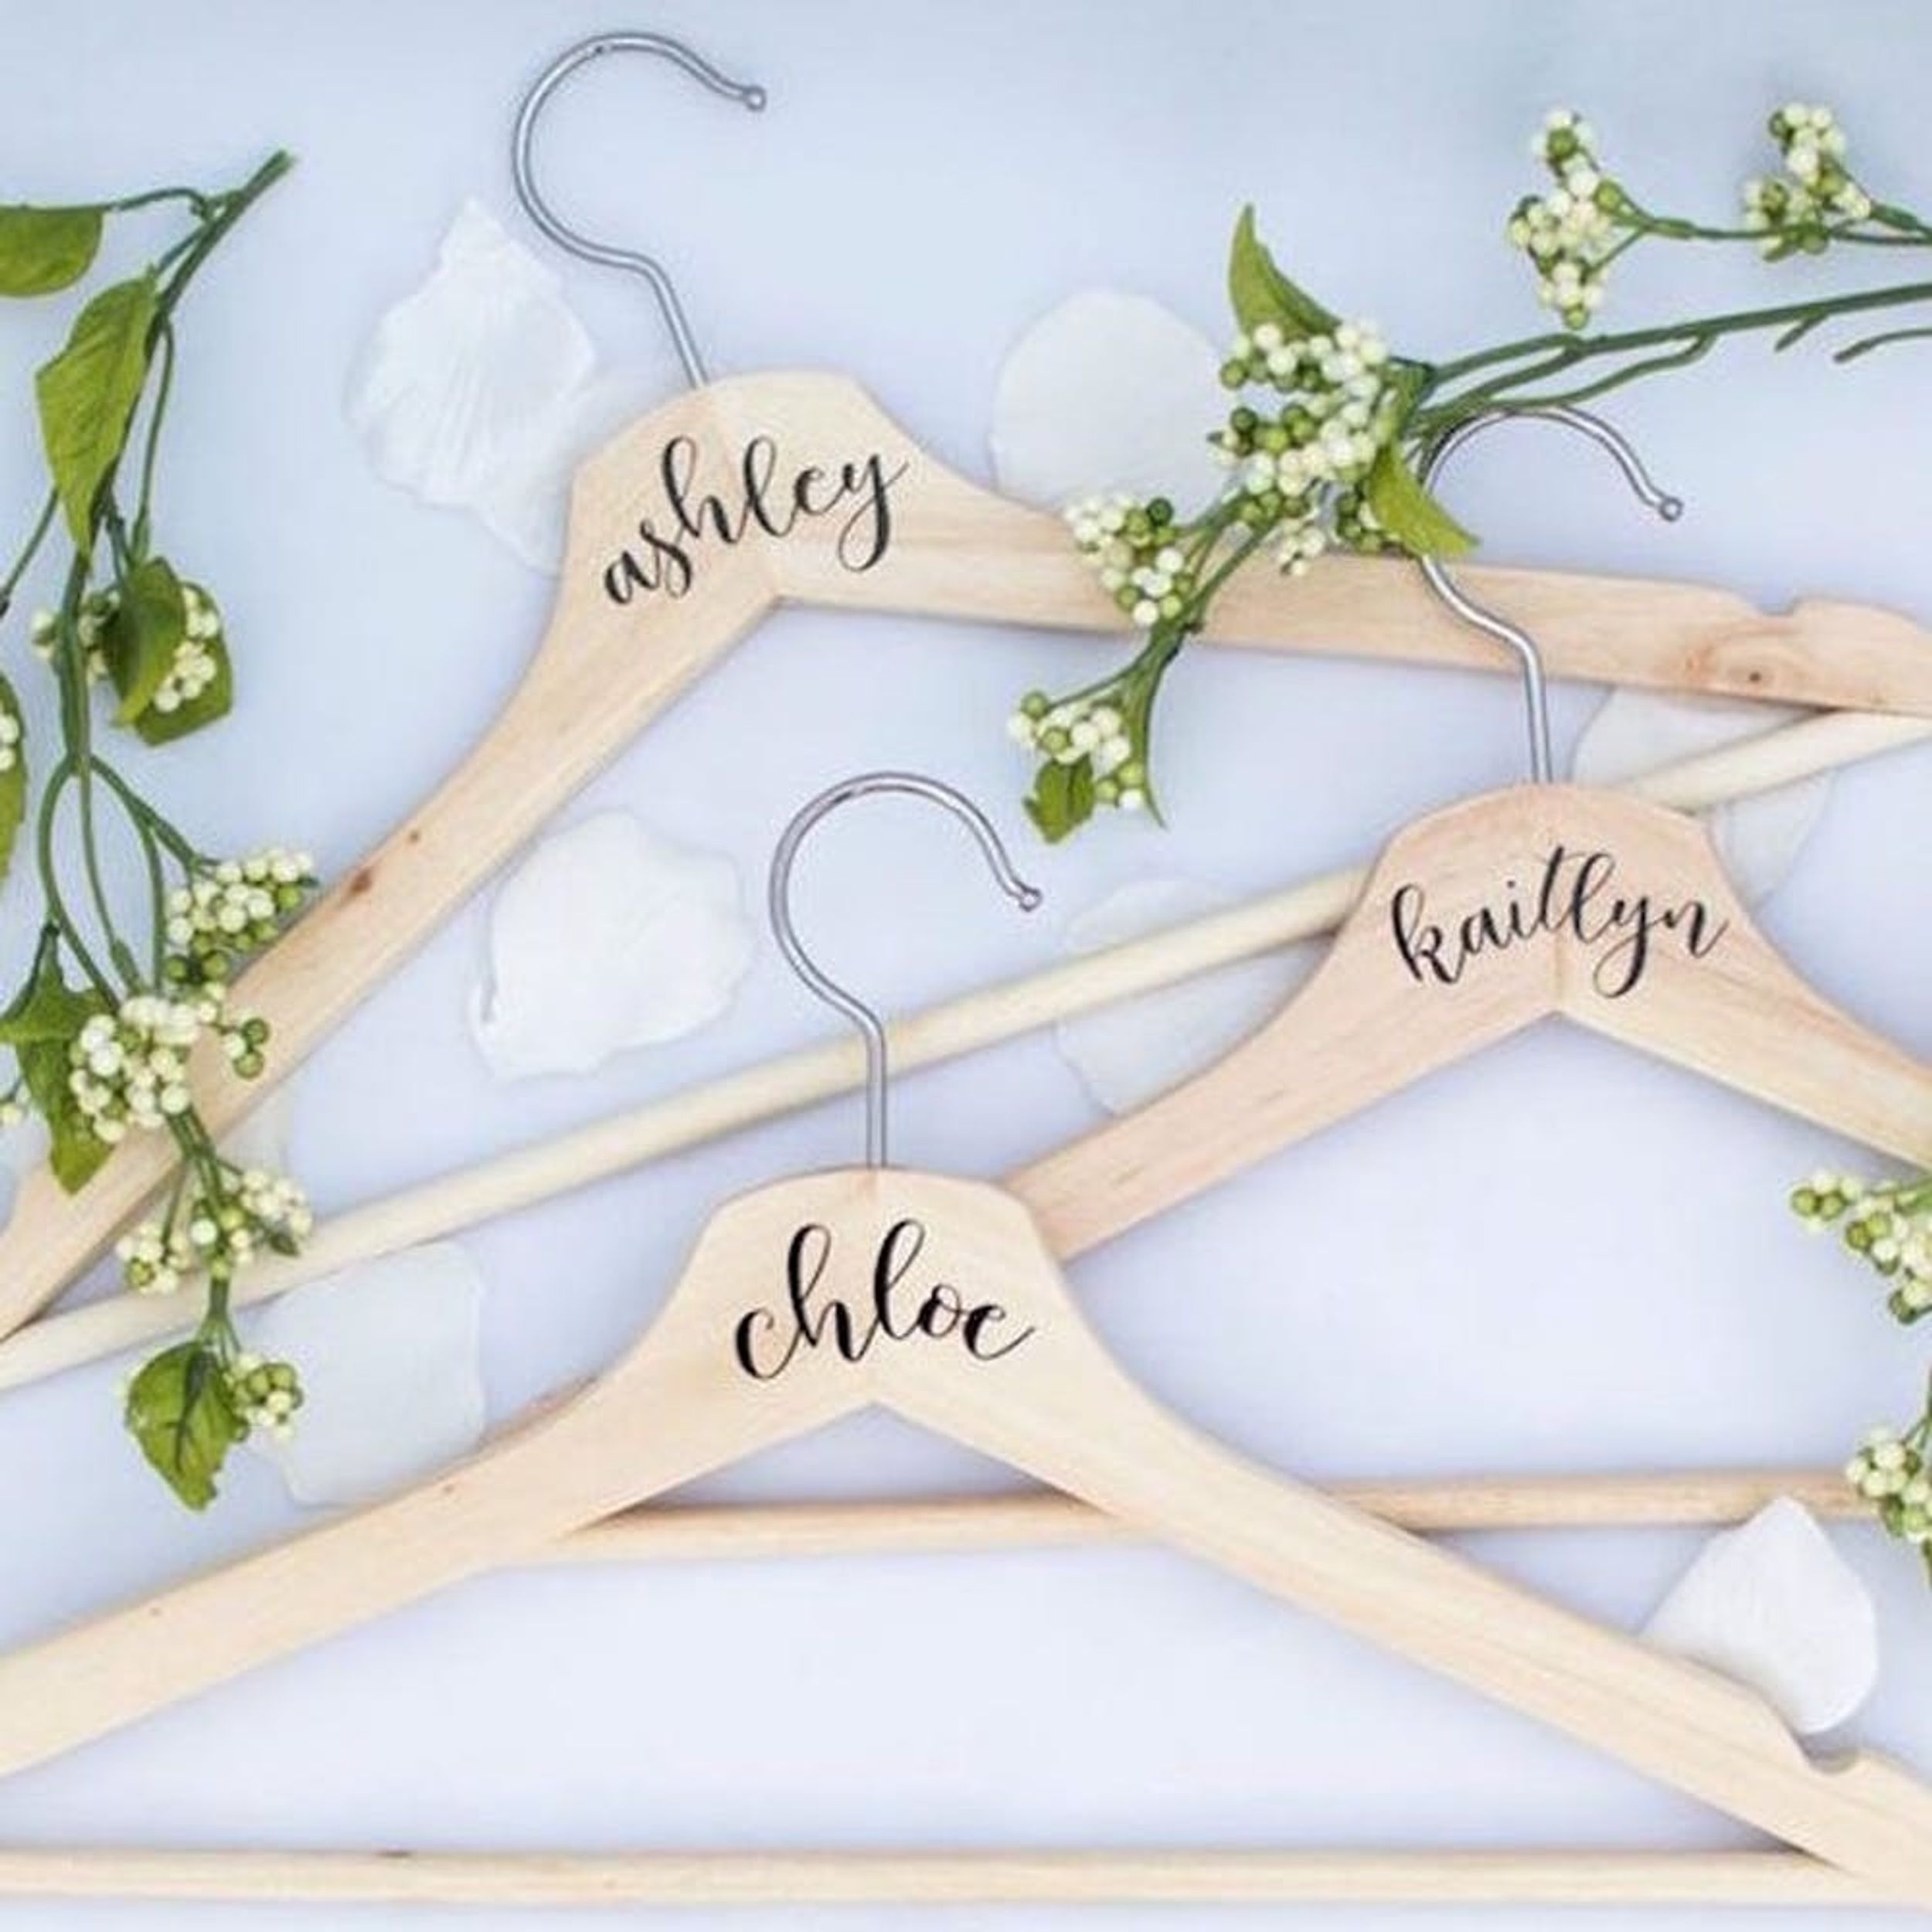 14 Gorgeous Spring Wedding Ideas You Can Totally DIY